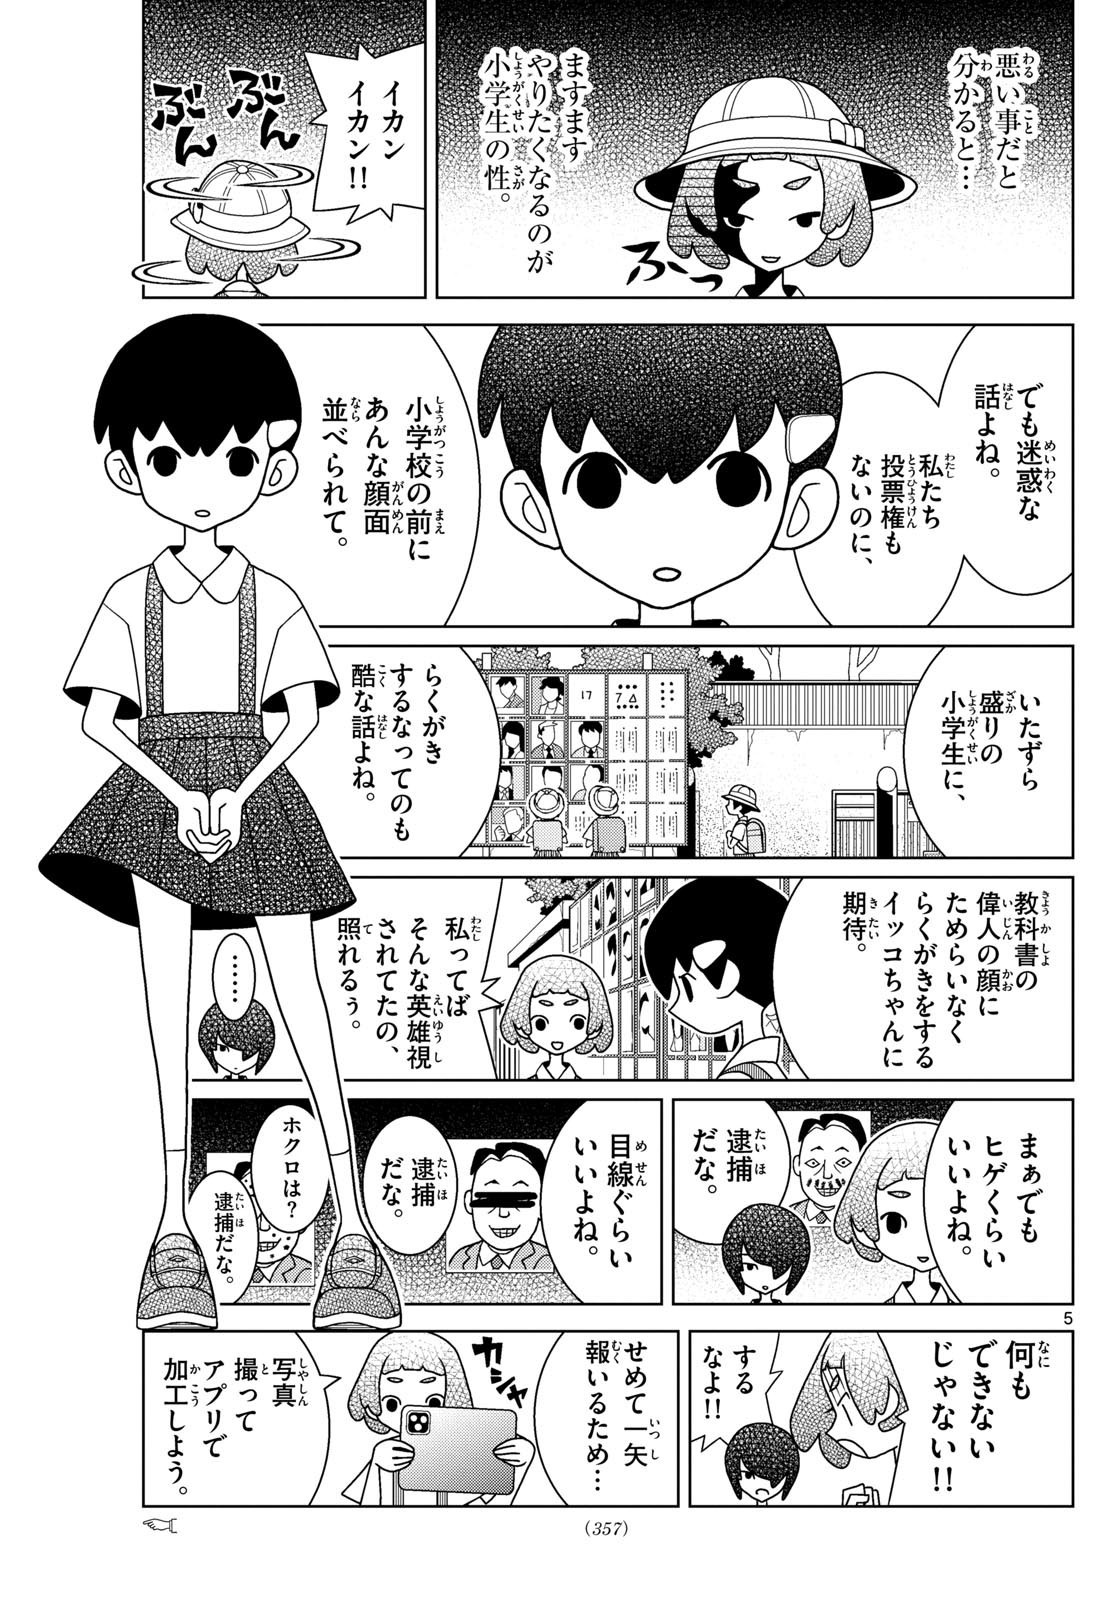 Shibuya Near Family - Chapter 099 - Page 5